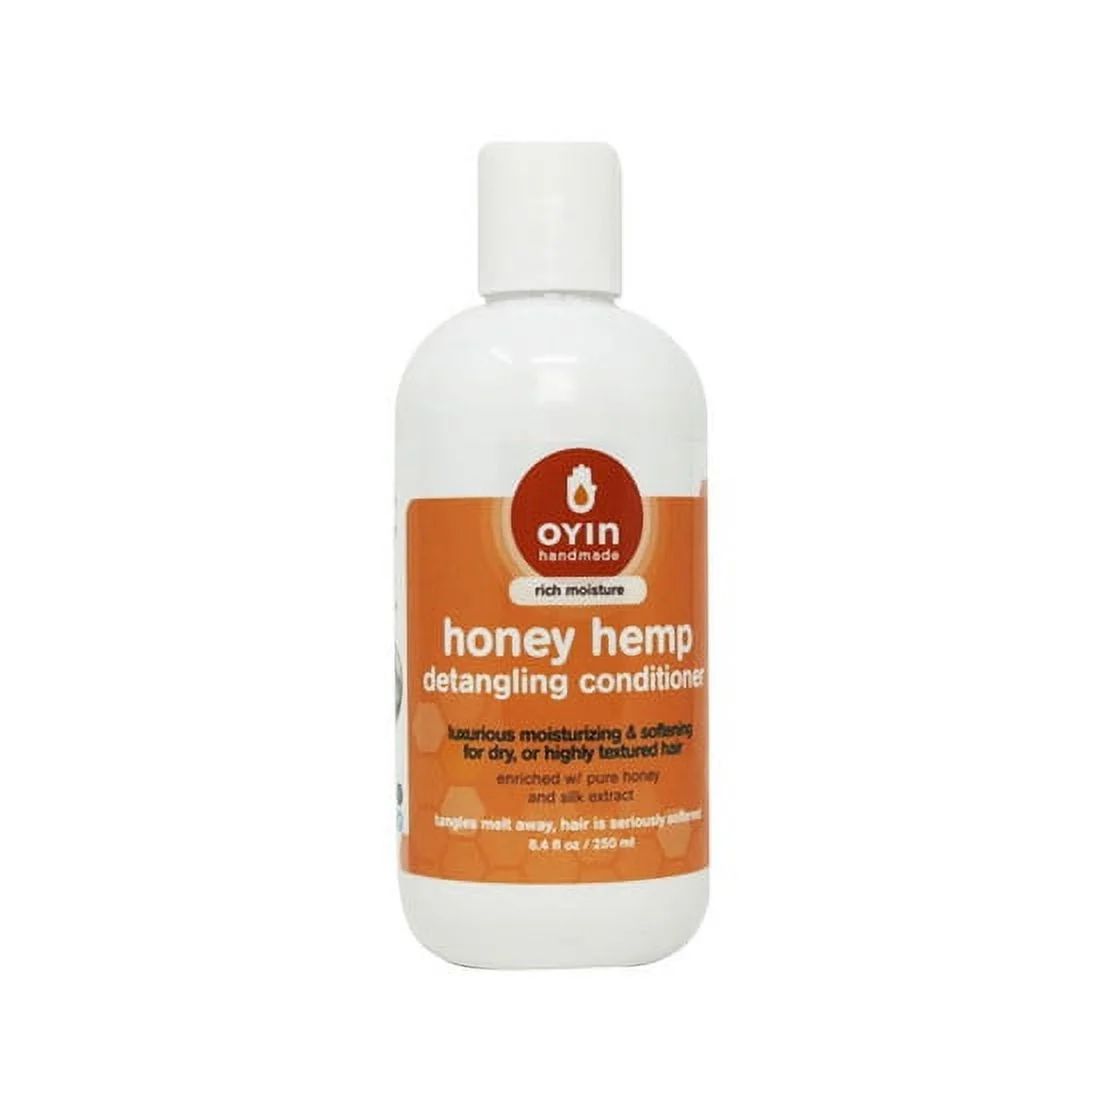 Oyin Handmade Honey Hemp ~ detangling and moisturizing hair conditioner | Walmart (US)